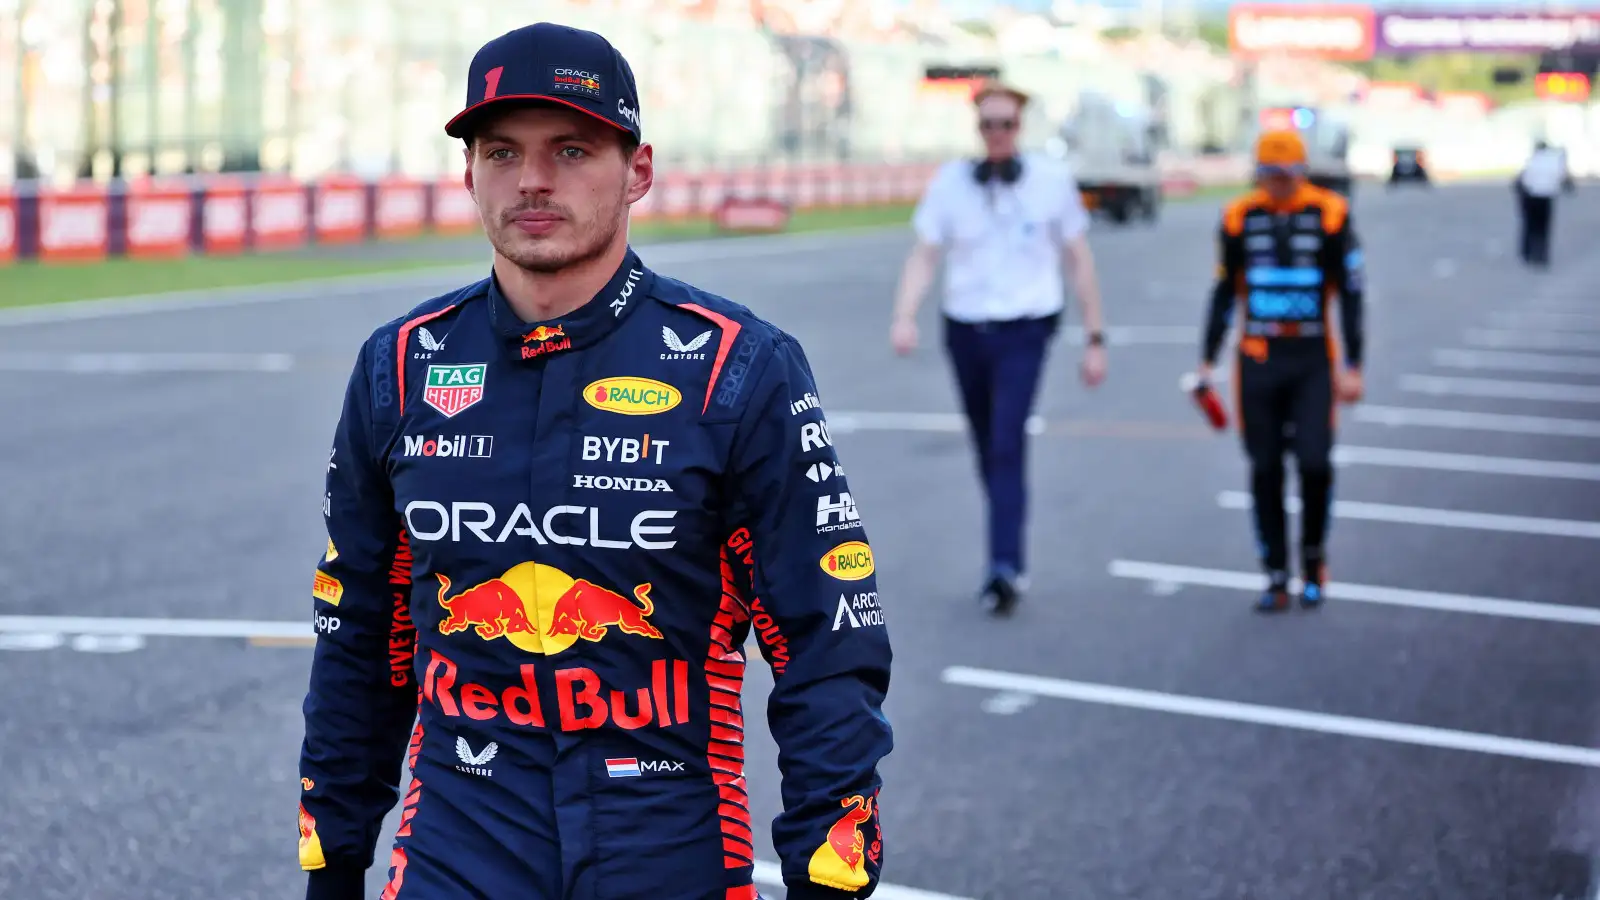 Red Bull's Max Verstappen on pole position for the Japanese Grand Prix.